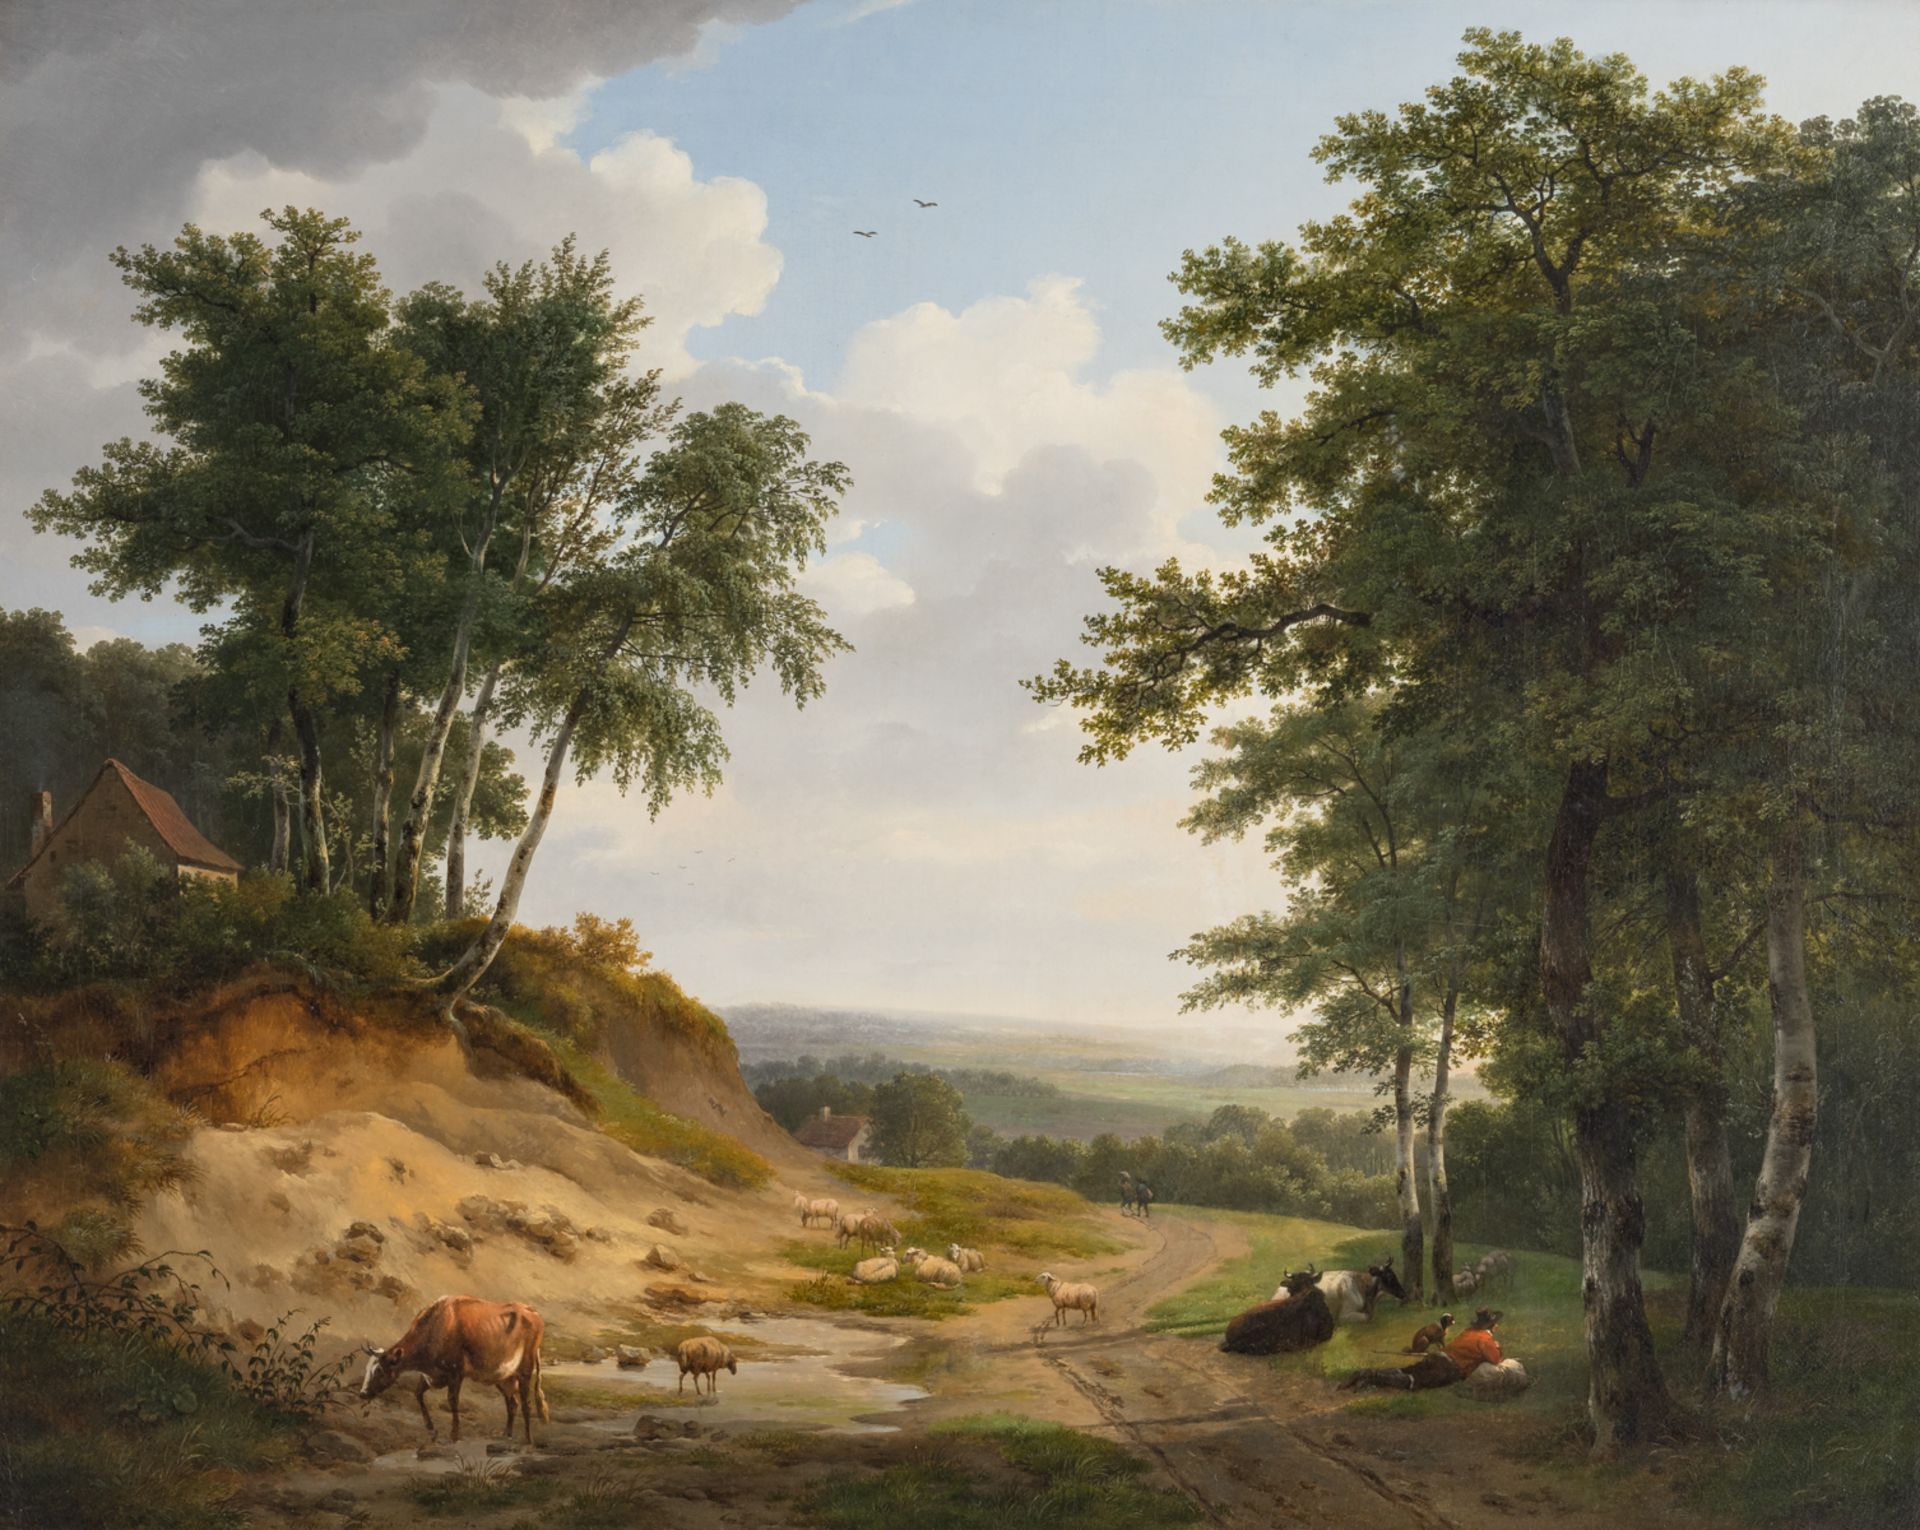 Verboeckhoven E. & Hellemans P. J., the break, dated 1825, oil on canvas, 82 x 103 cm; ex exhibition